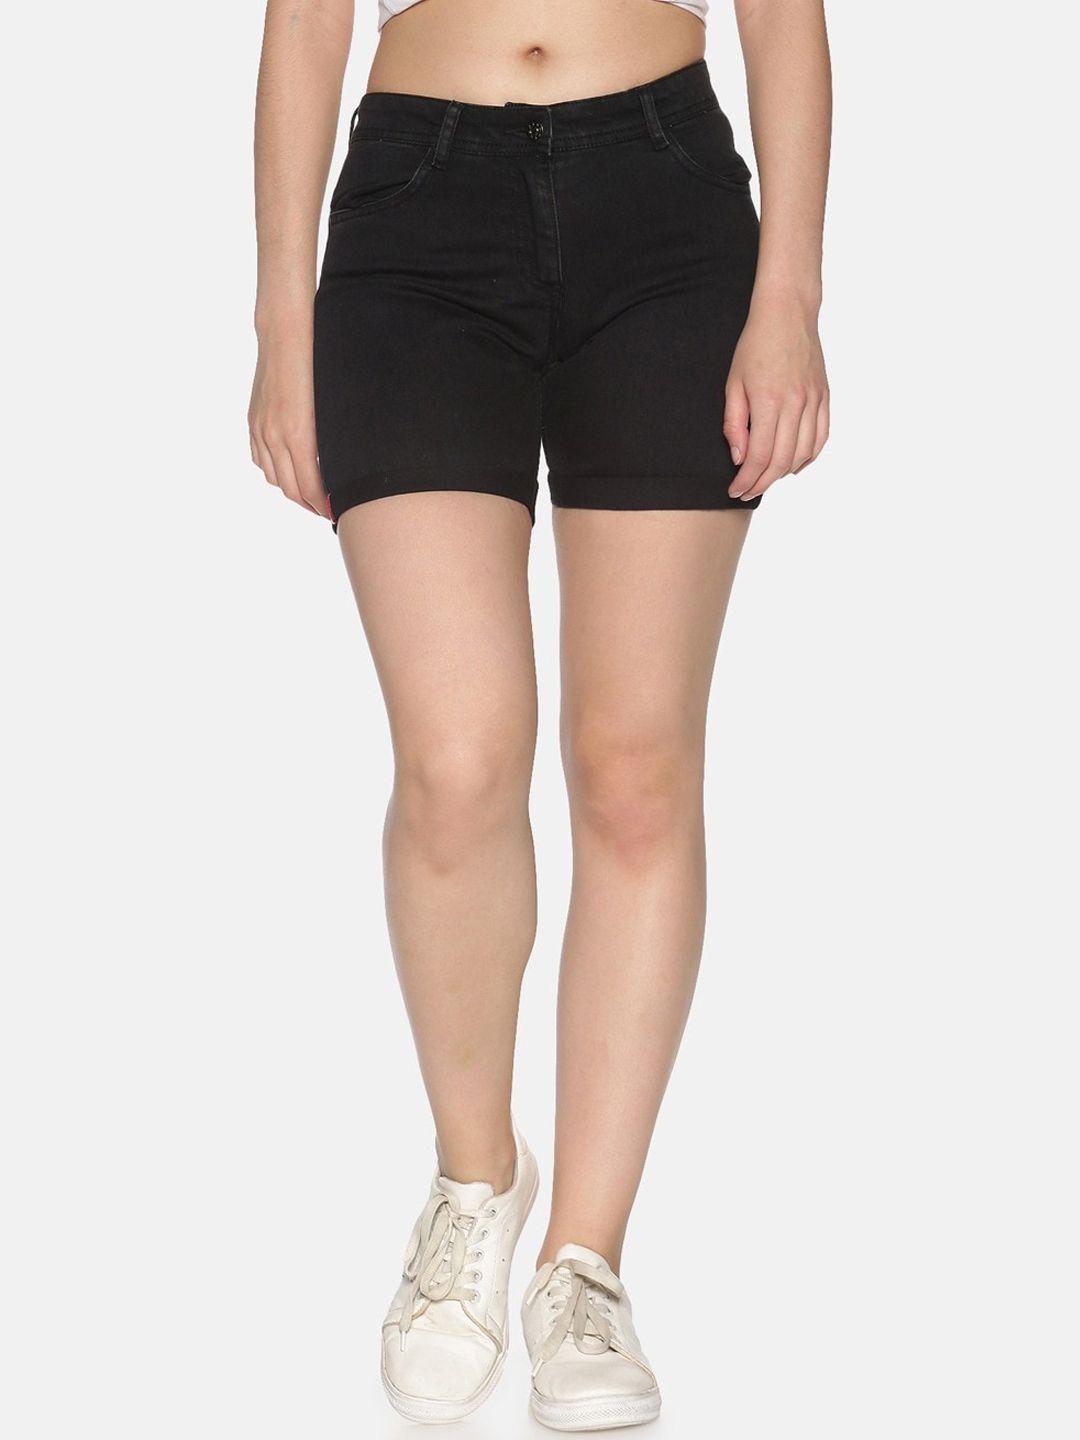 twin-birds-women-mid-rise-skinny-fit-cotton-denim-shorts